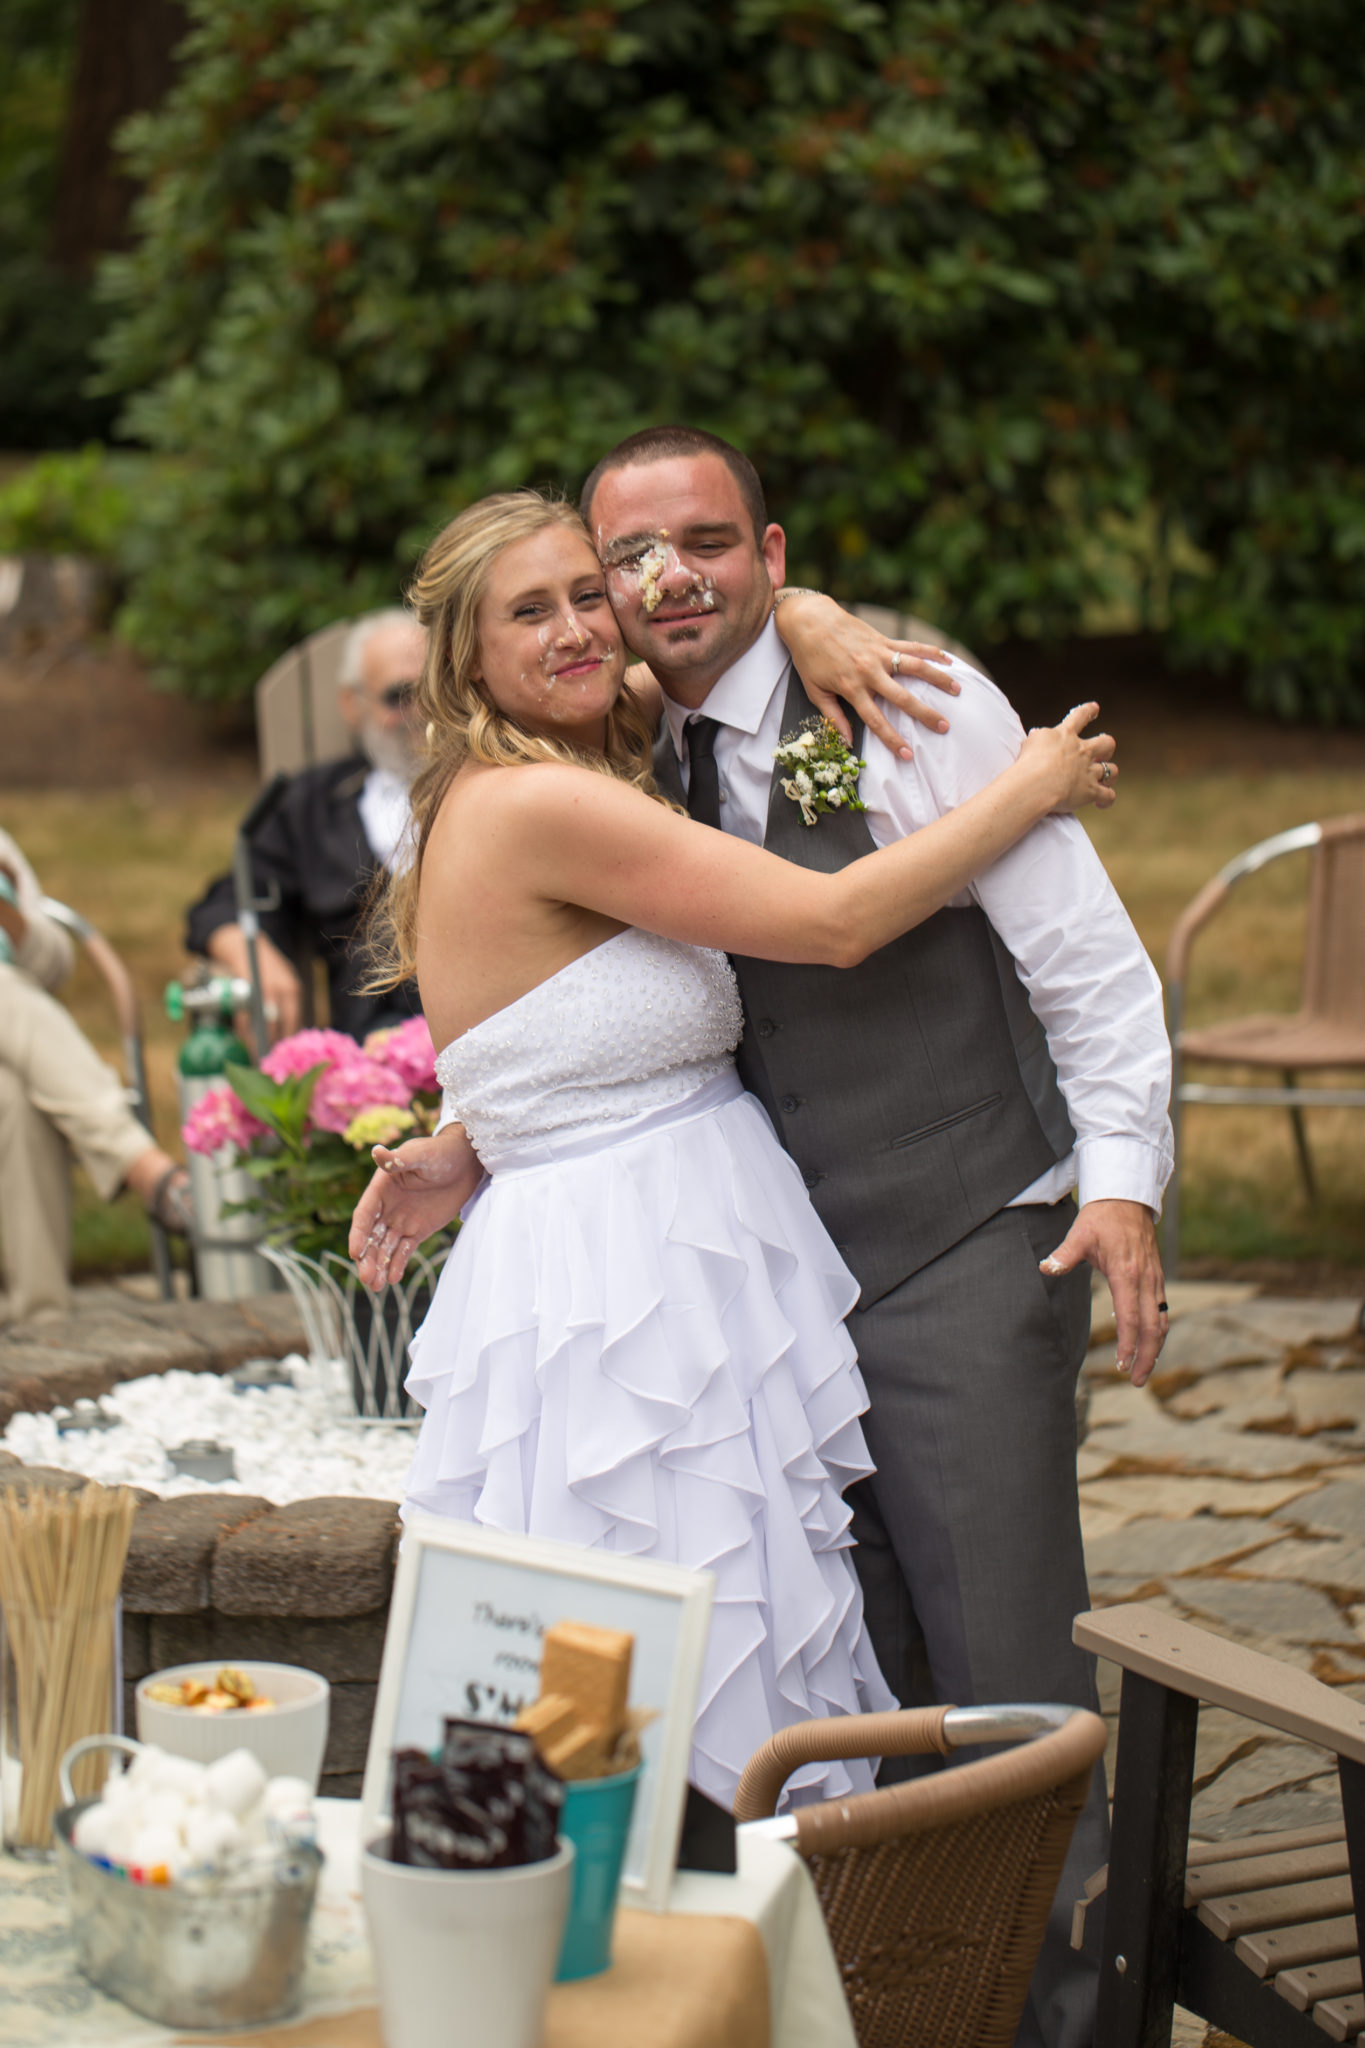 Cruz Reception Cake 33 WOODINVILLE BACKYARD POOL WEDDING | WOODINVILLE WEDDING PHOTOGRAPHER